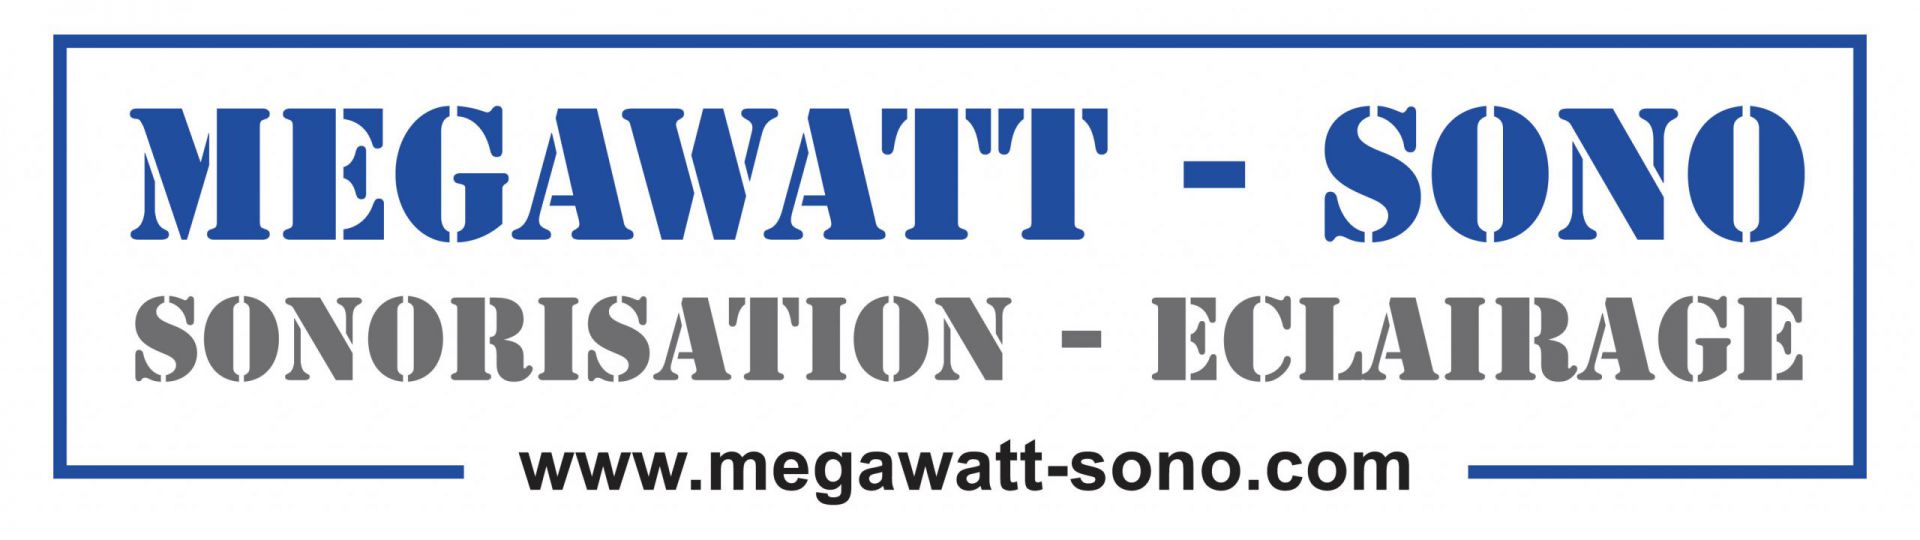 MEGAWATT-SONO